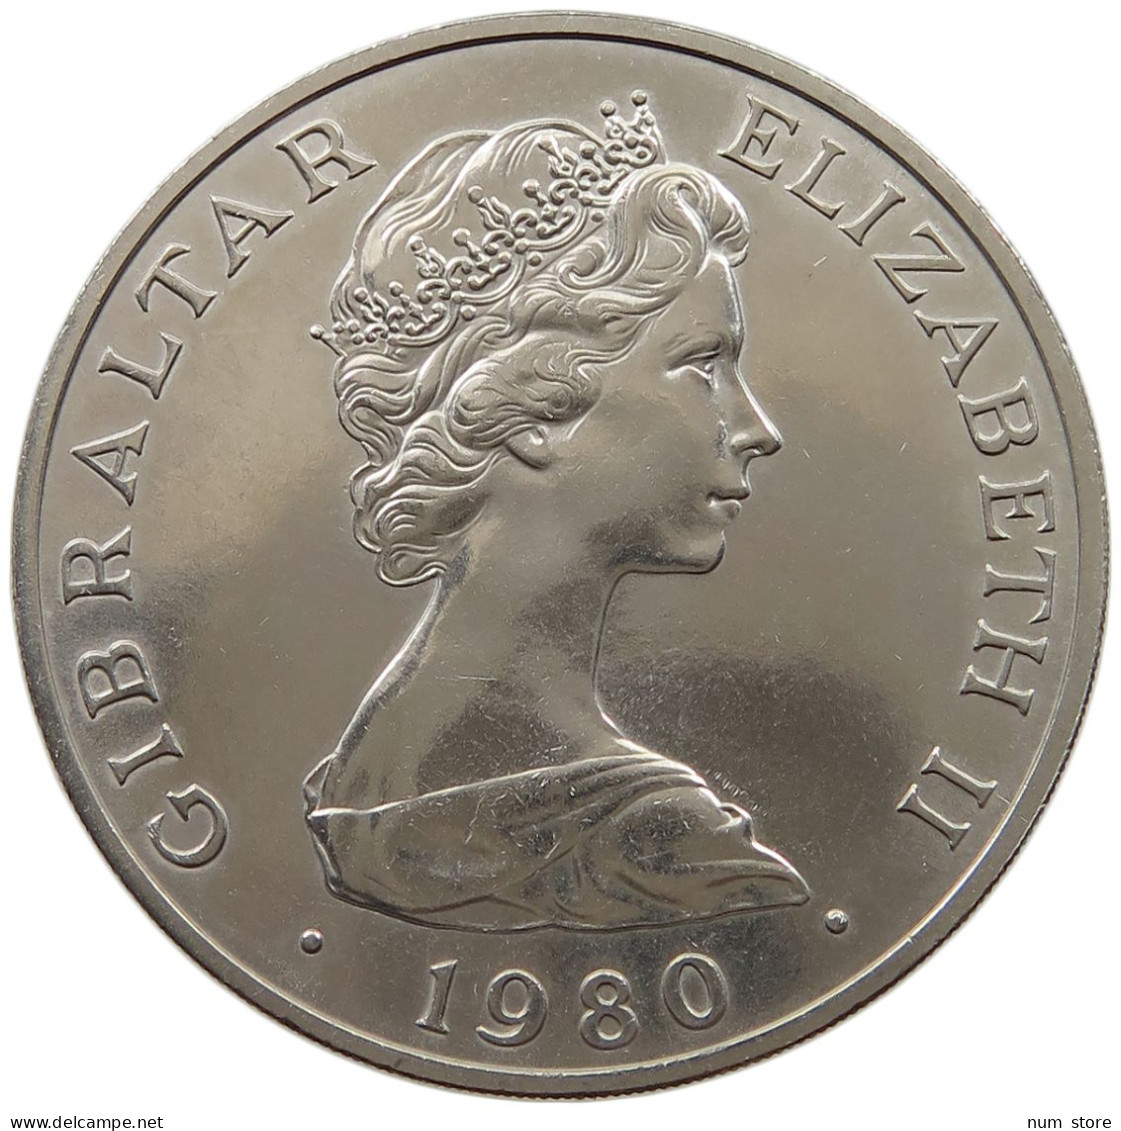 GIBRALTAR CROWN 1980 Elizabeth II. (1952-2022) #a096 0287 - Gibraltar